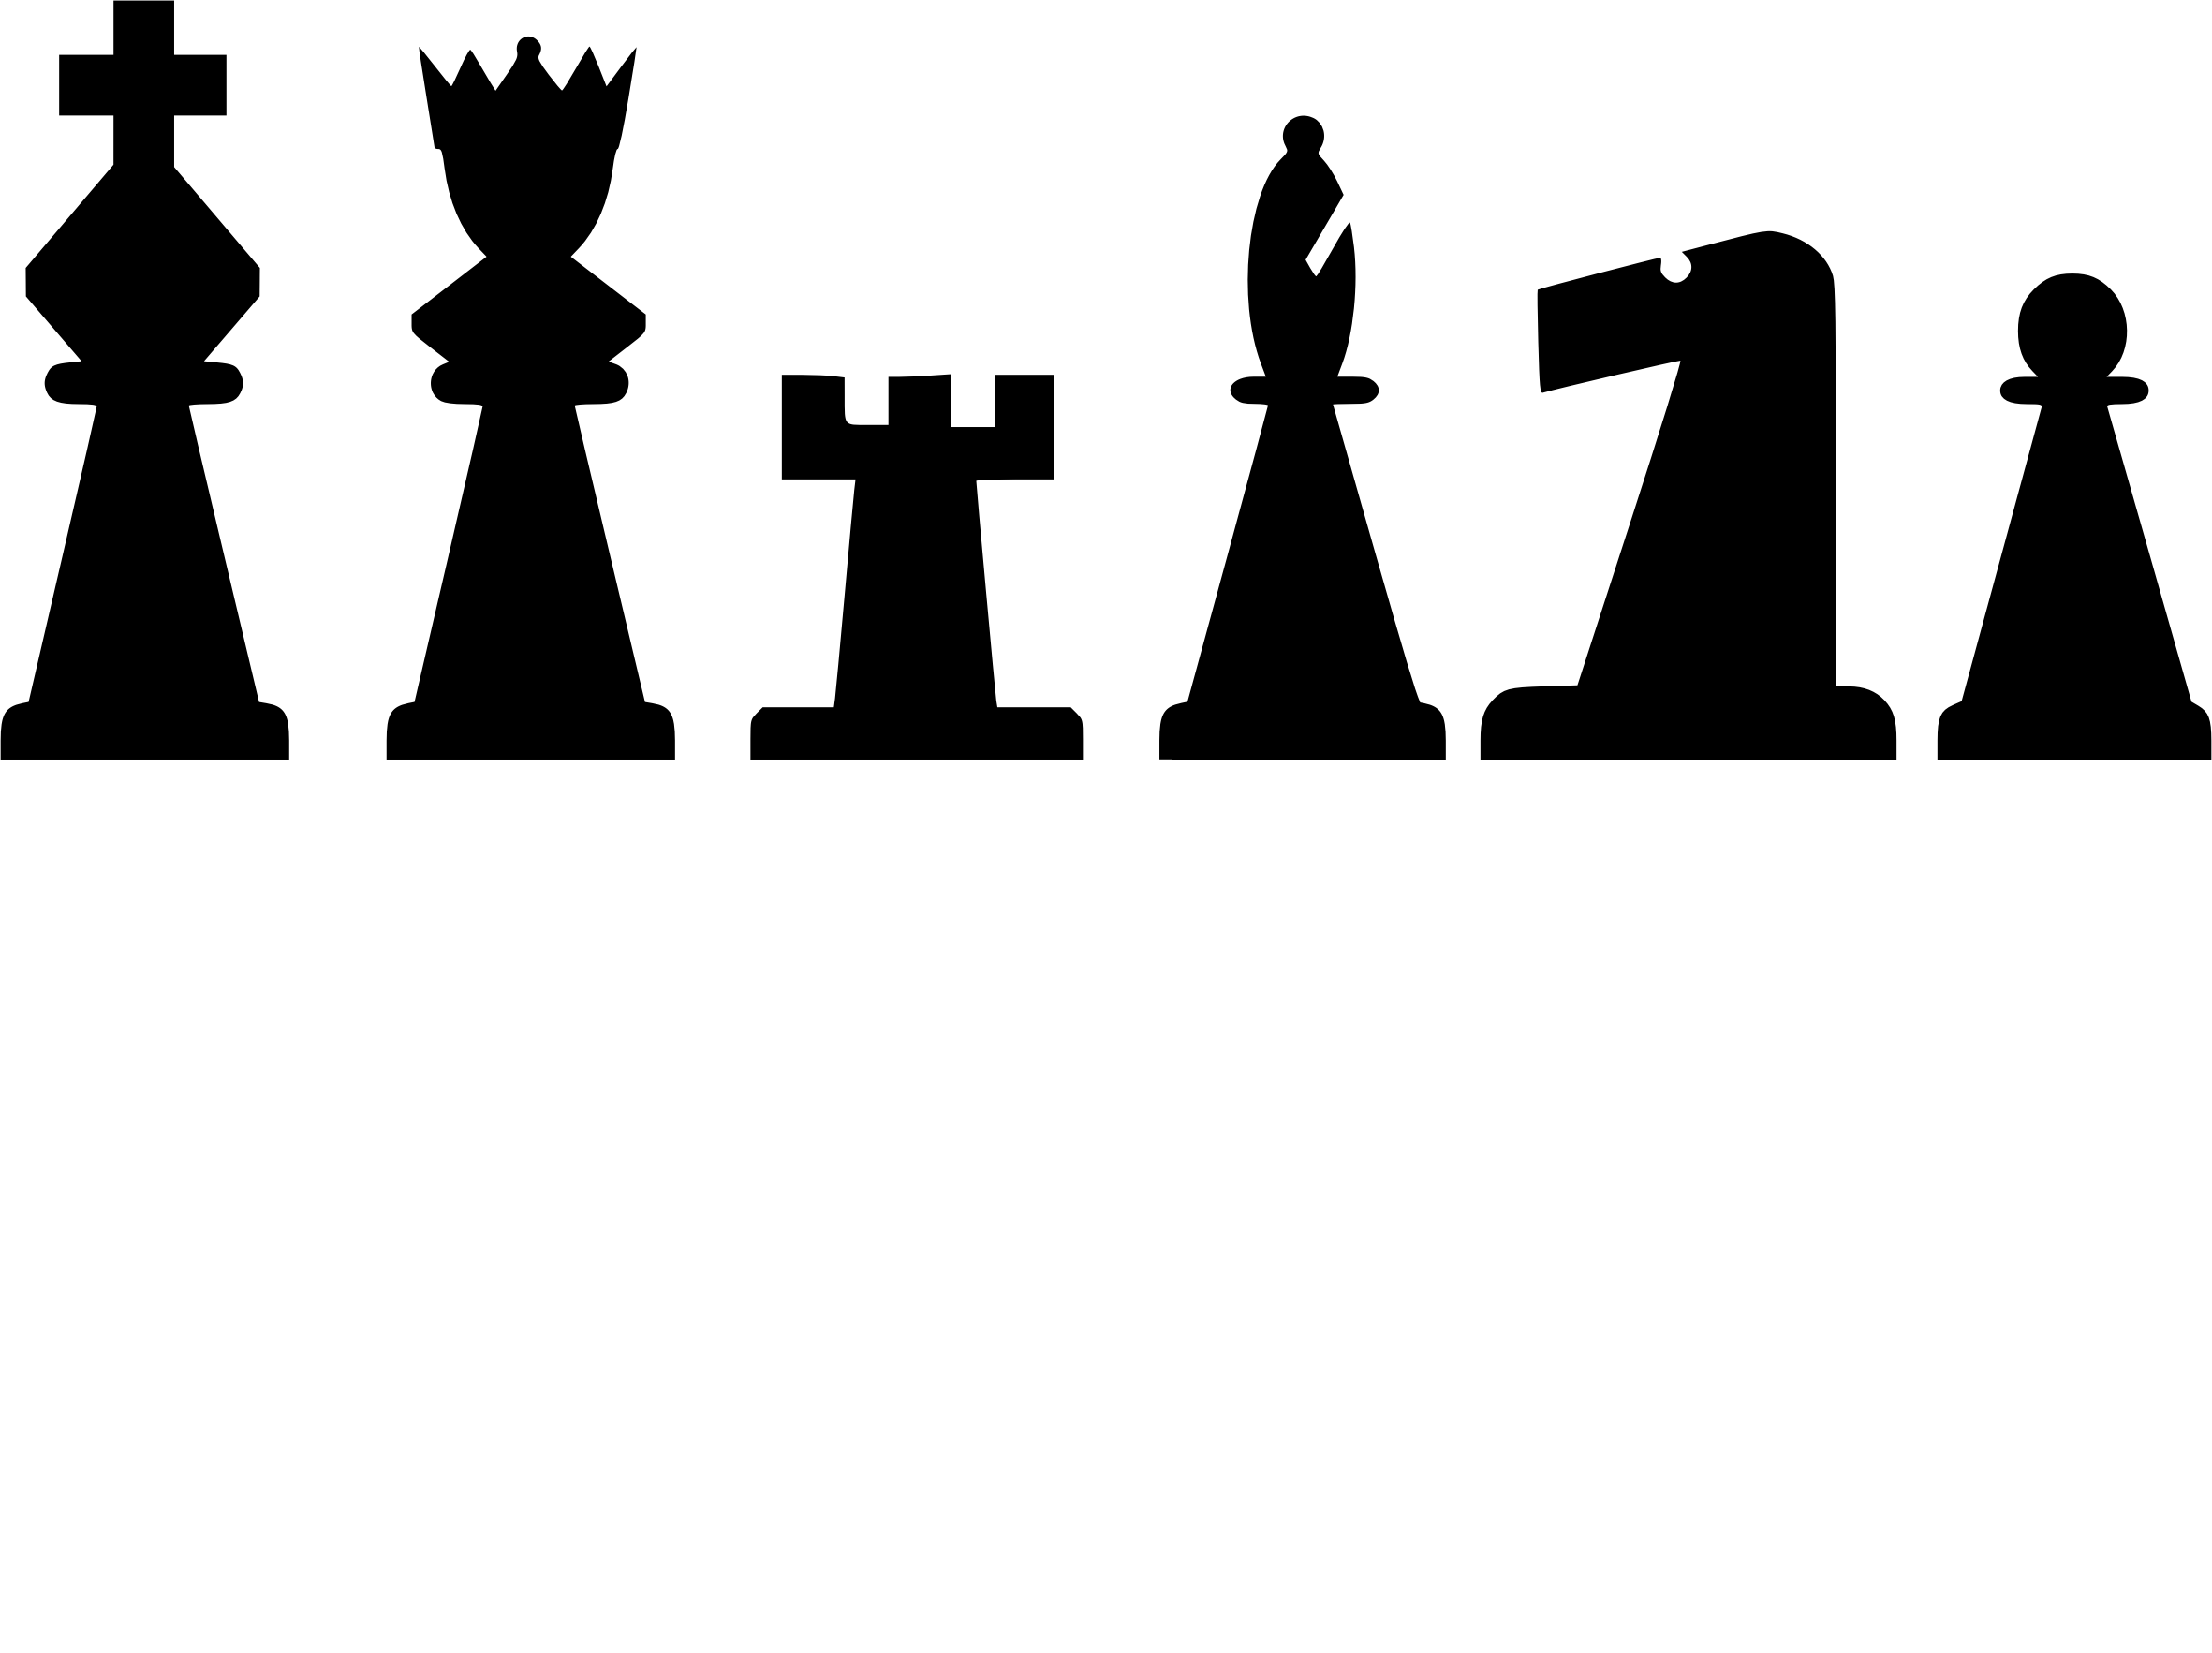 chess clipart chess set